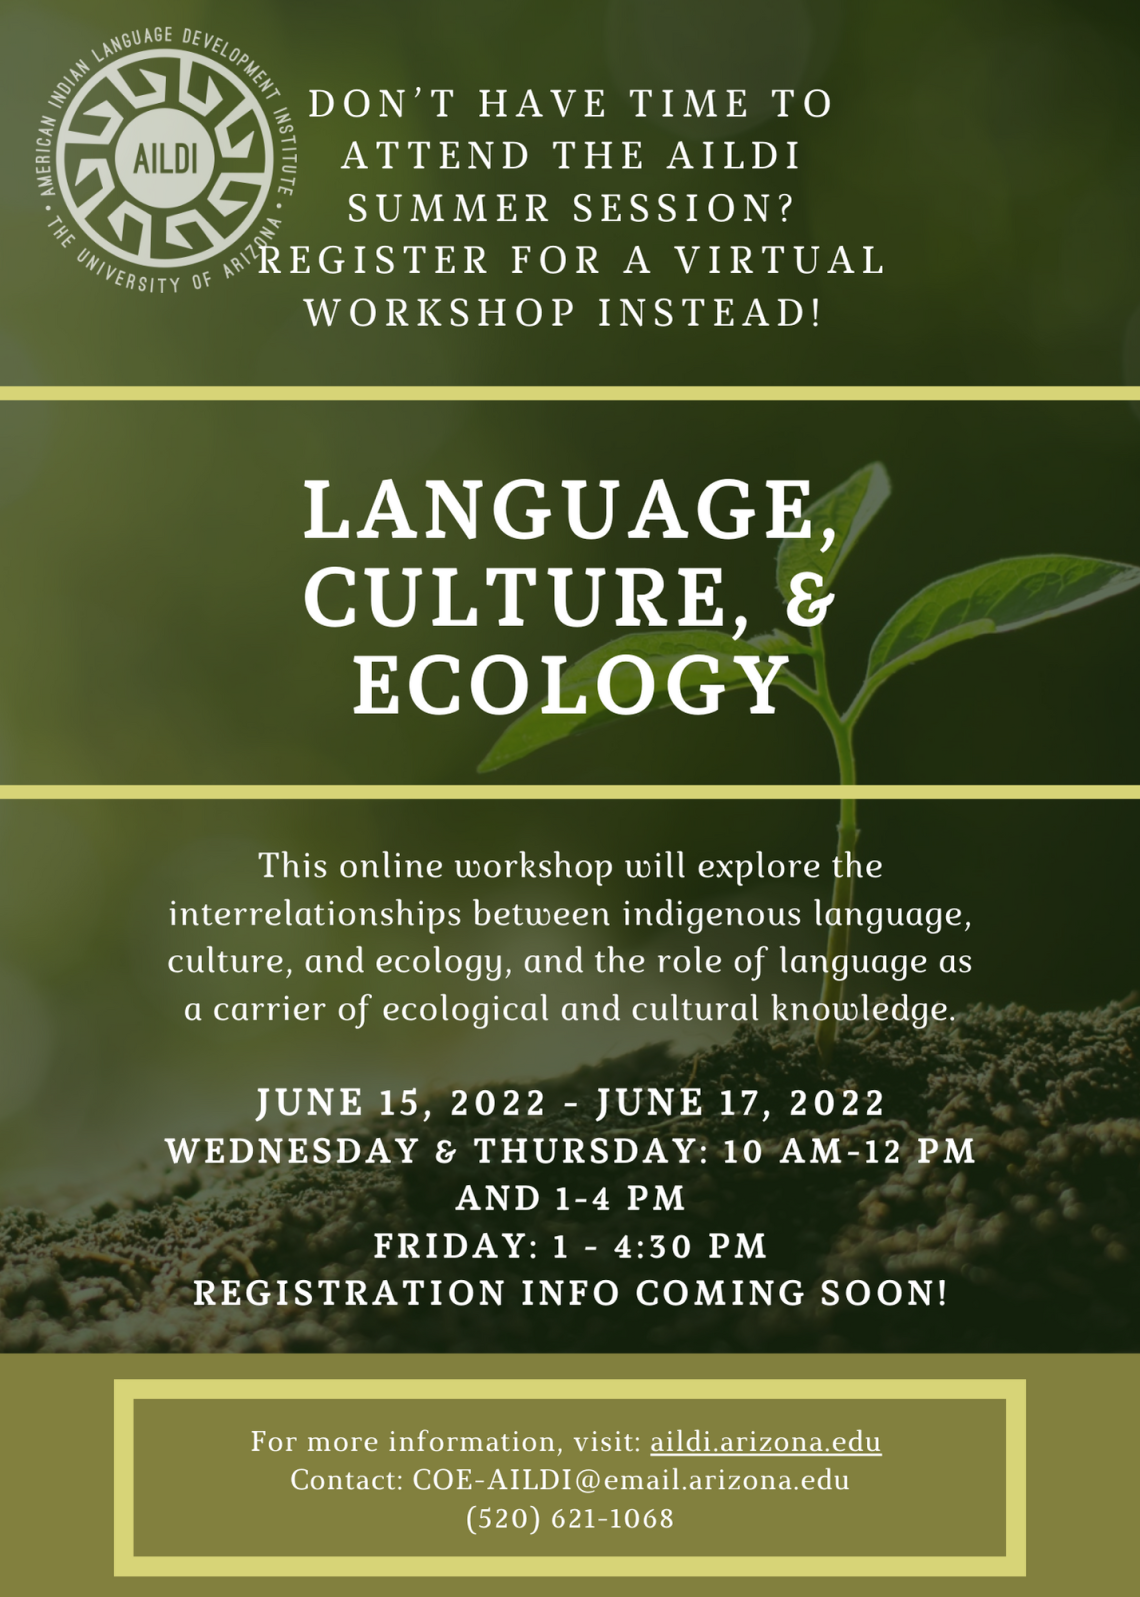 Language, Culture & Ecology Workshop poster